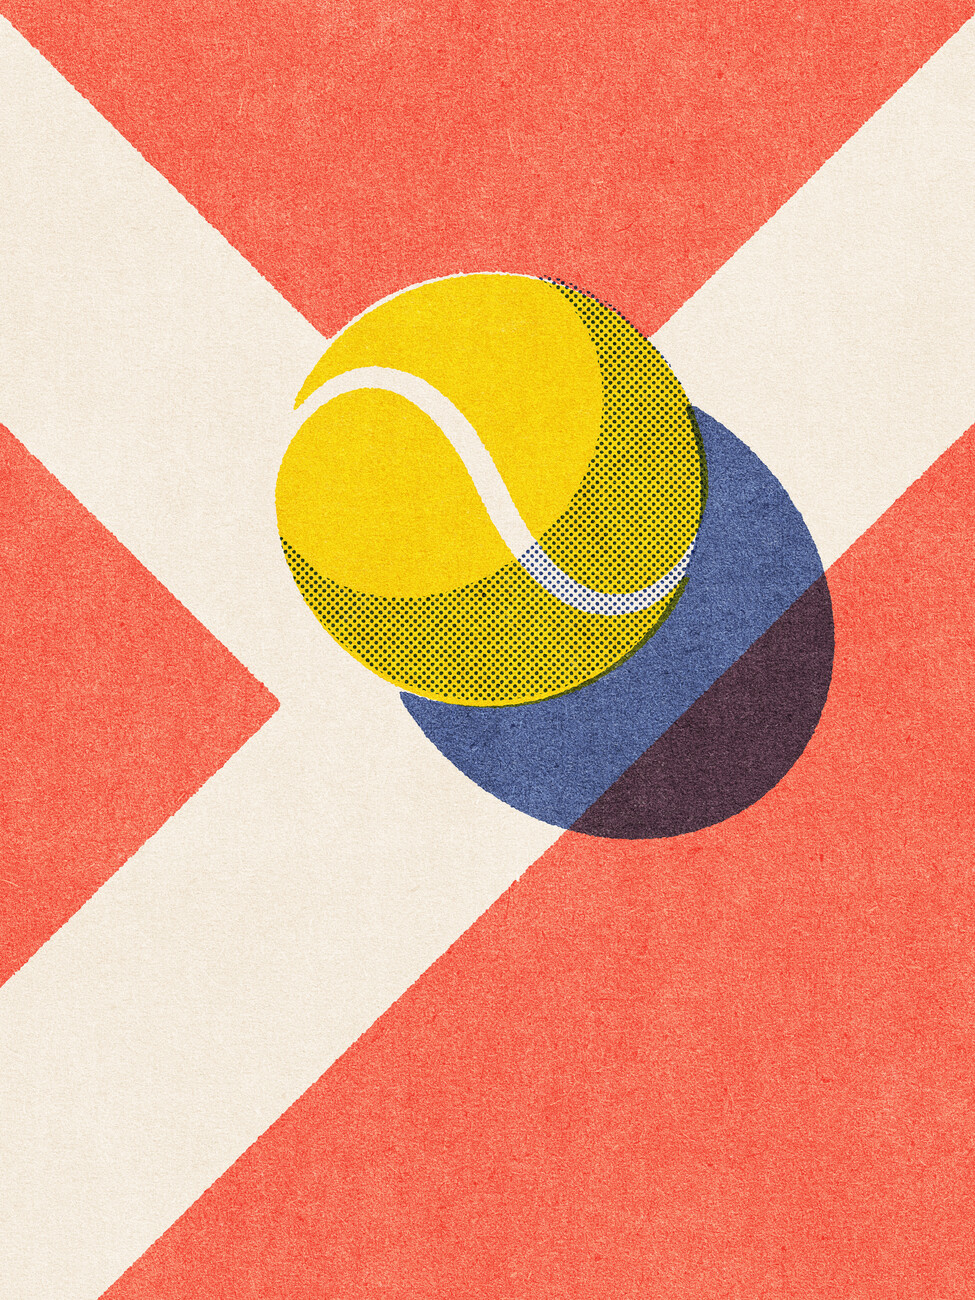 Wall Art Print BALLS / Tennis - clay court | Gifts & Merchandise |  Europosters